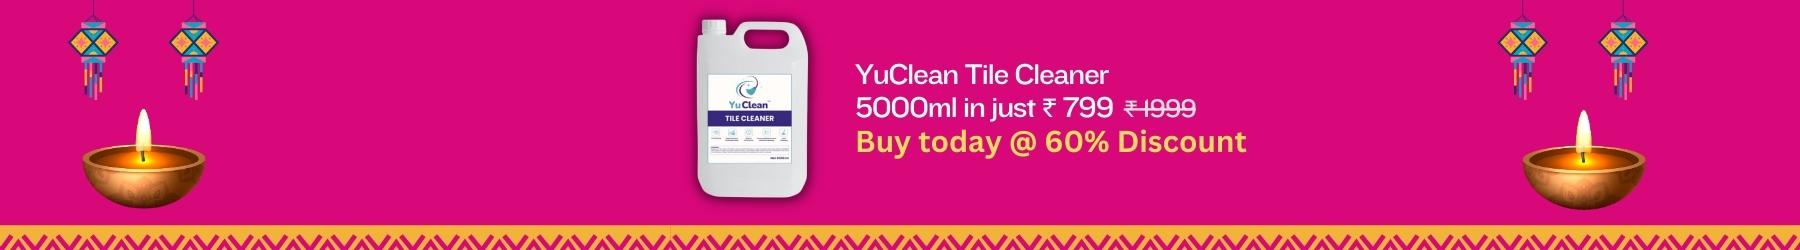 #YuClean Tile Cleaner on Sale at Superdham